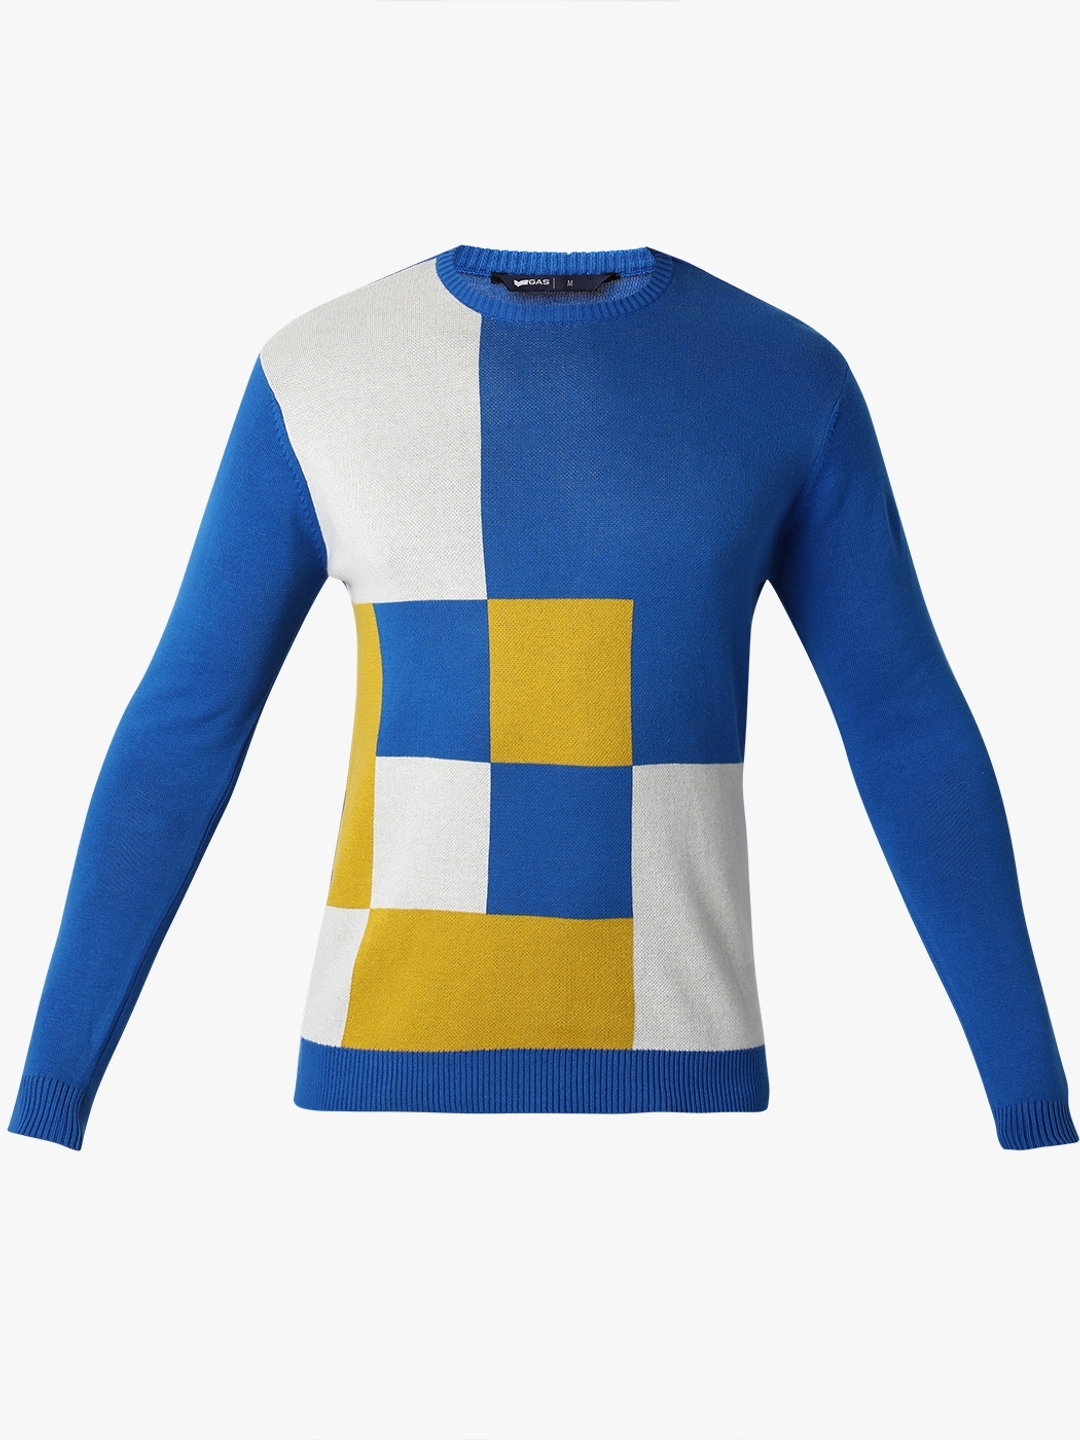 Regular Fit Full Sleeve Rib Neck Colourblock Cotton Sweater